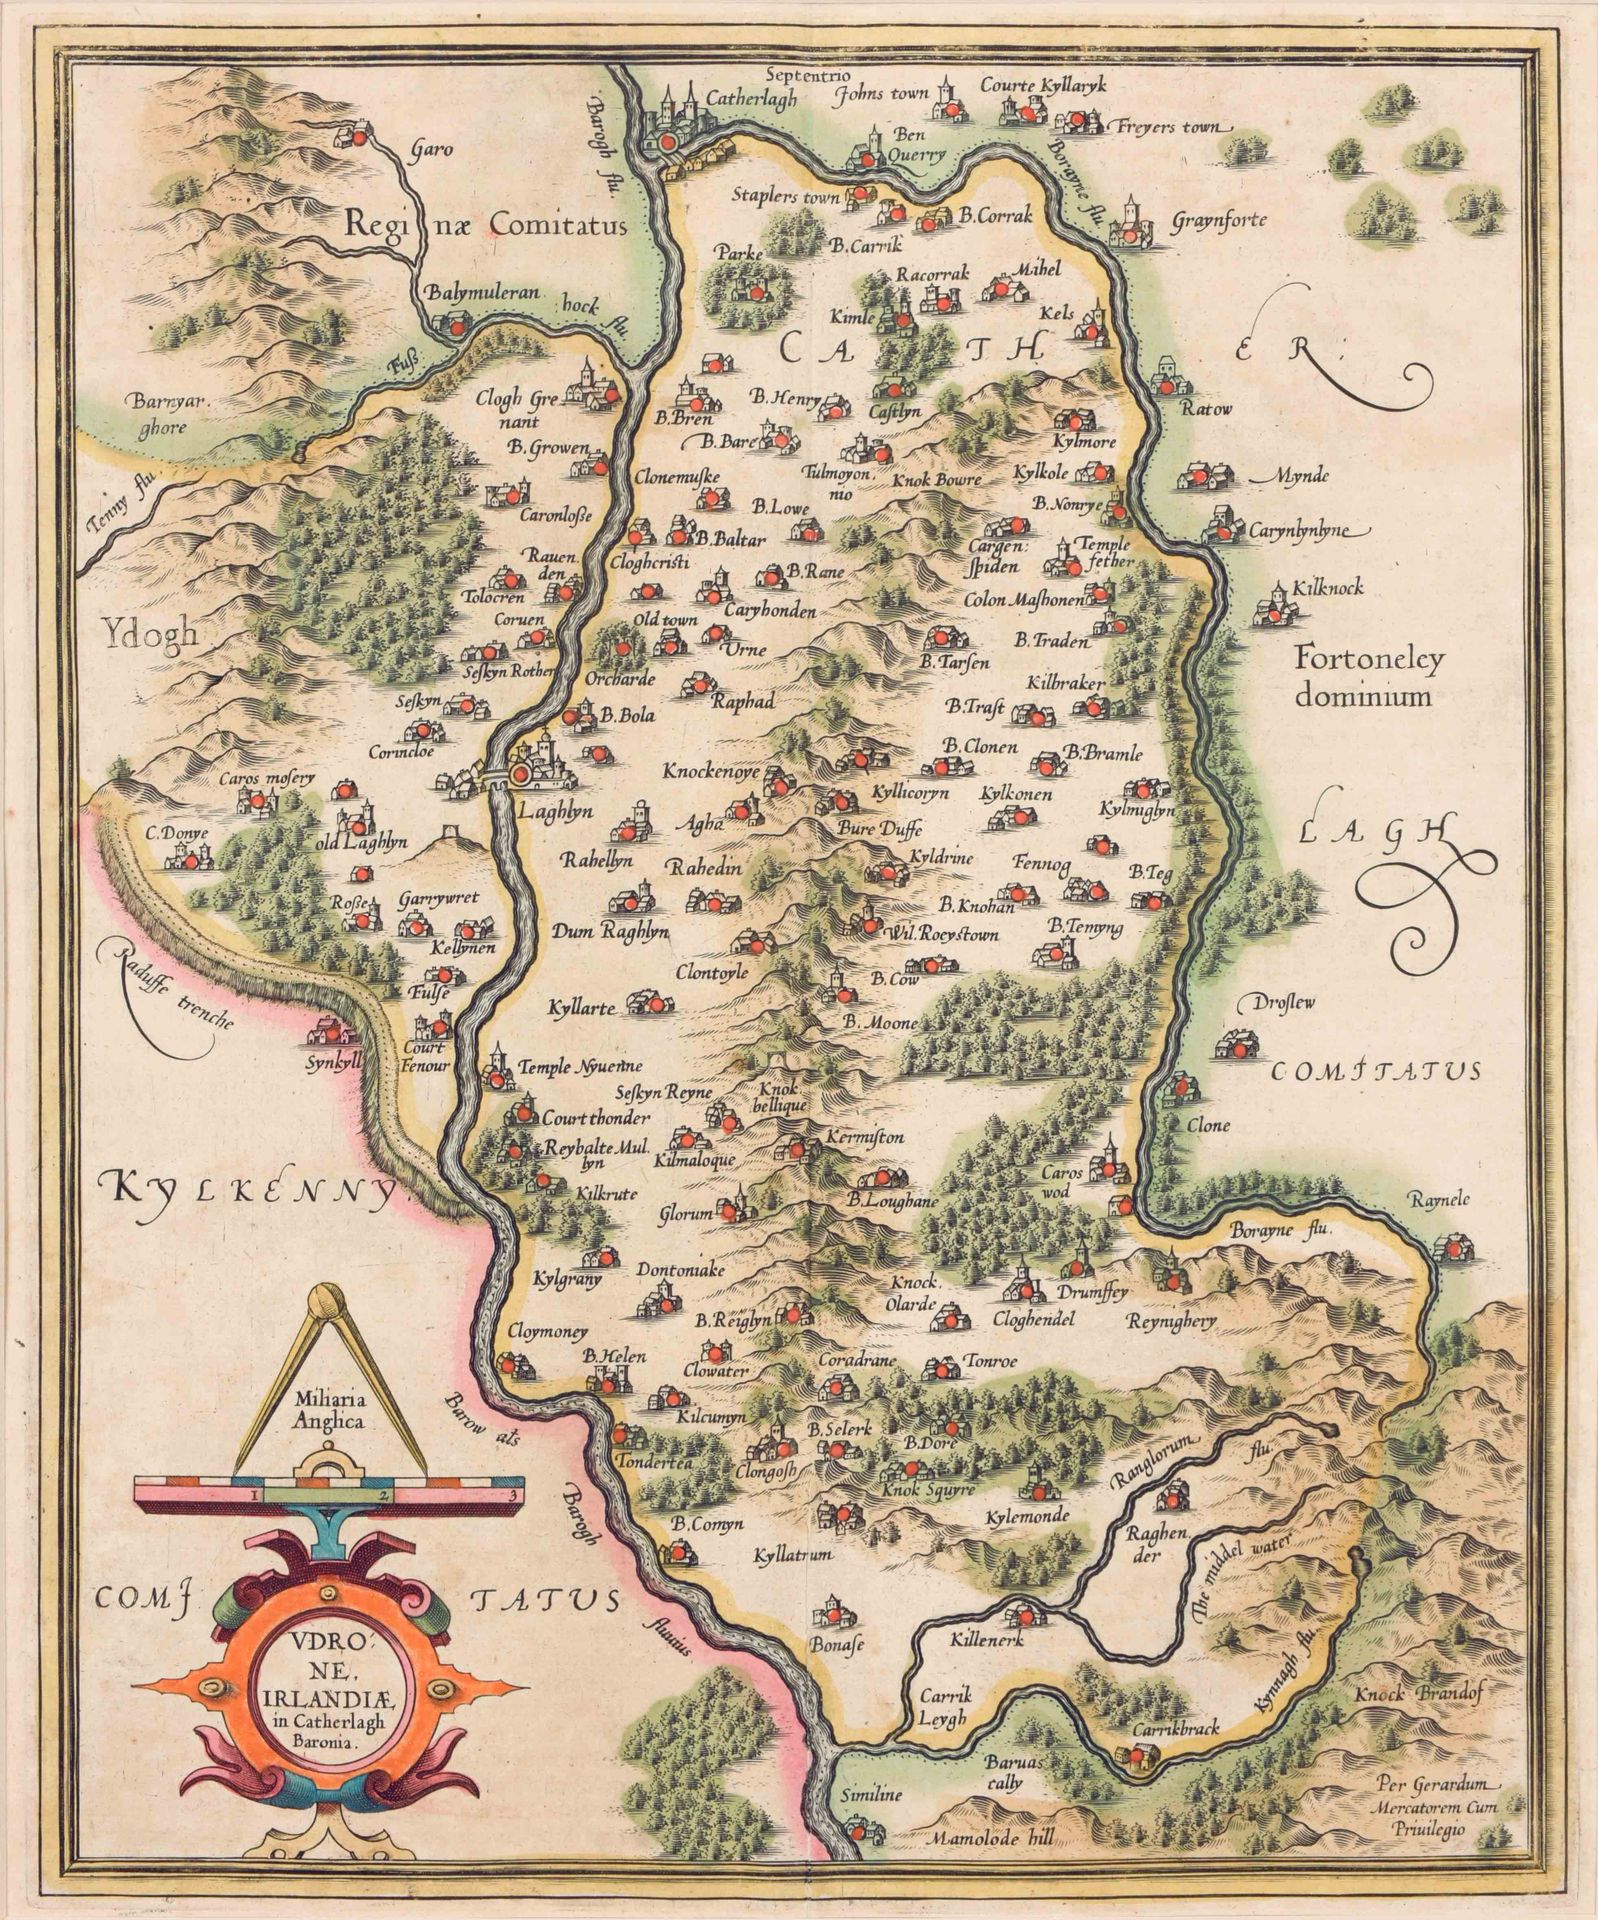 [IRELAND] Udrone. Irlandiae in Catherlagh Baronia (Carlow)

Carta geografica ori&hellip;